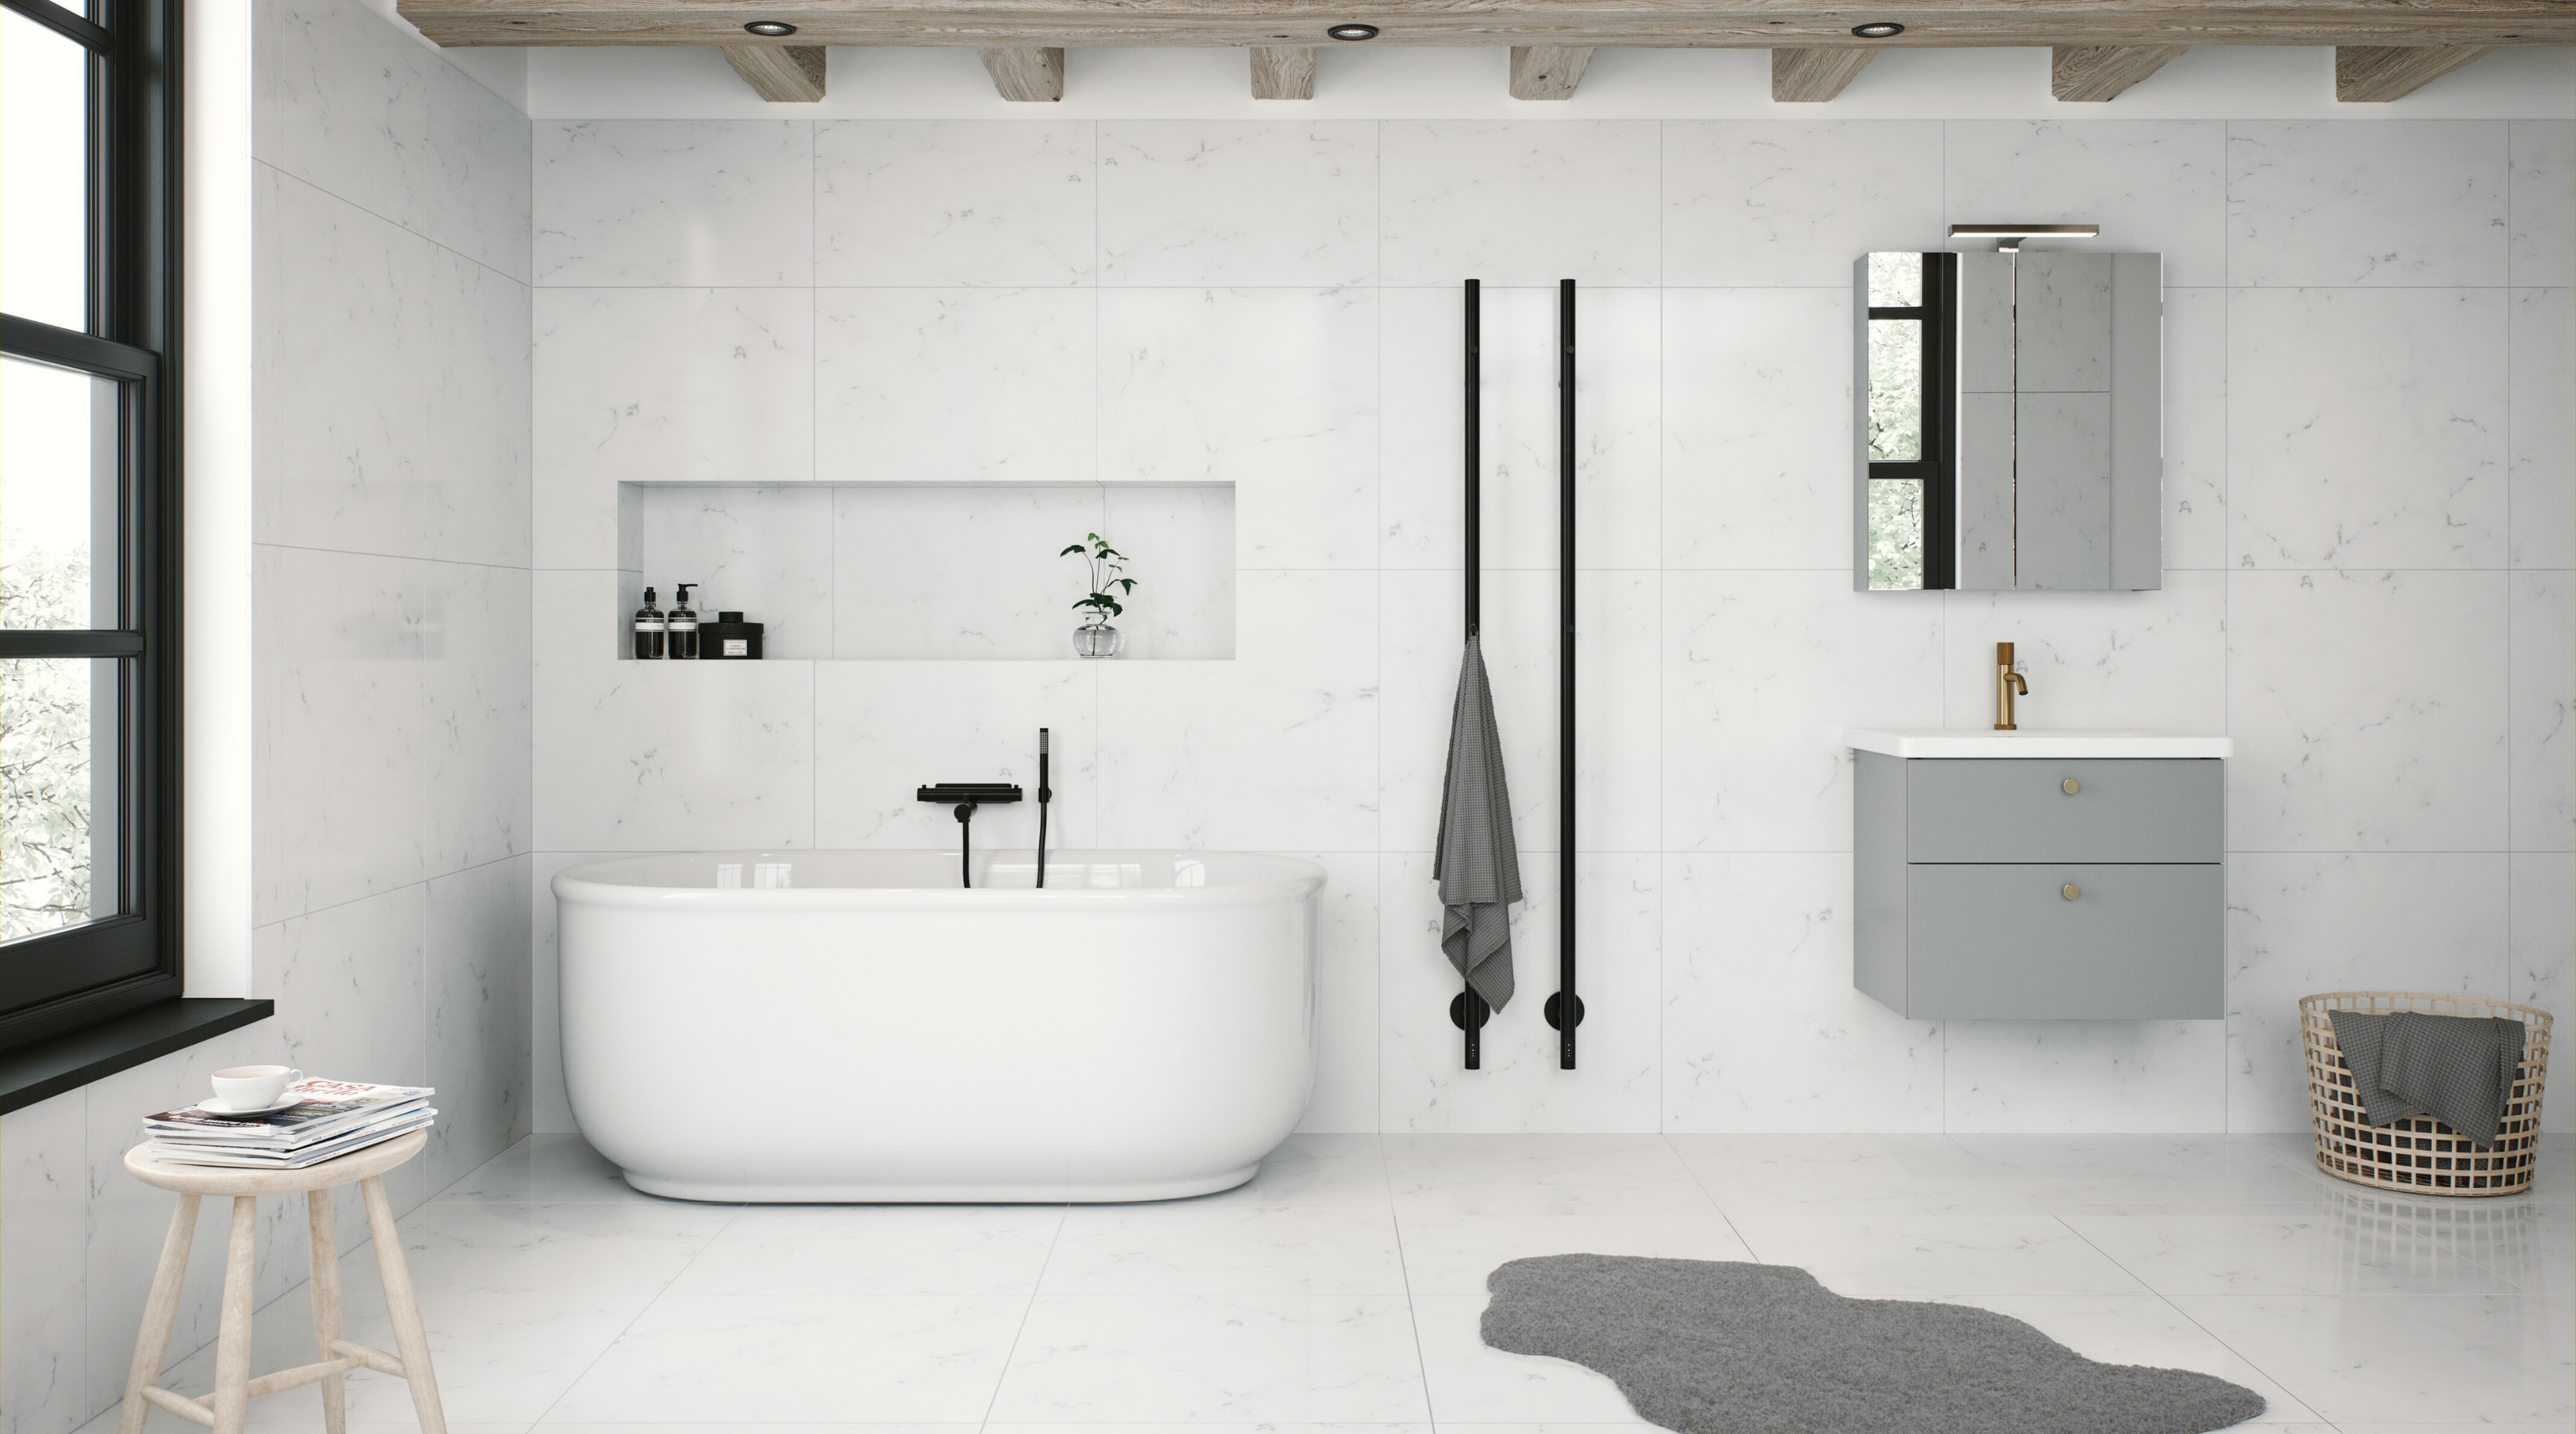 vitt fristående badkar 170cm i vitt marmor badrum